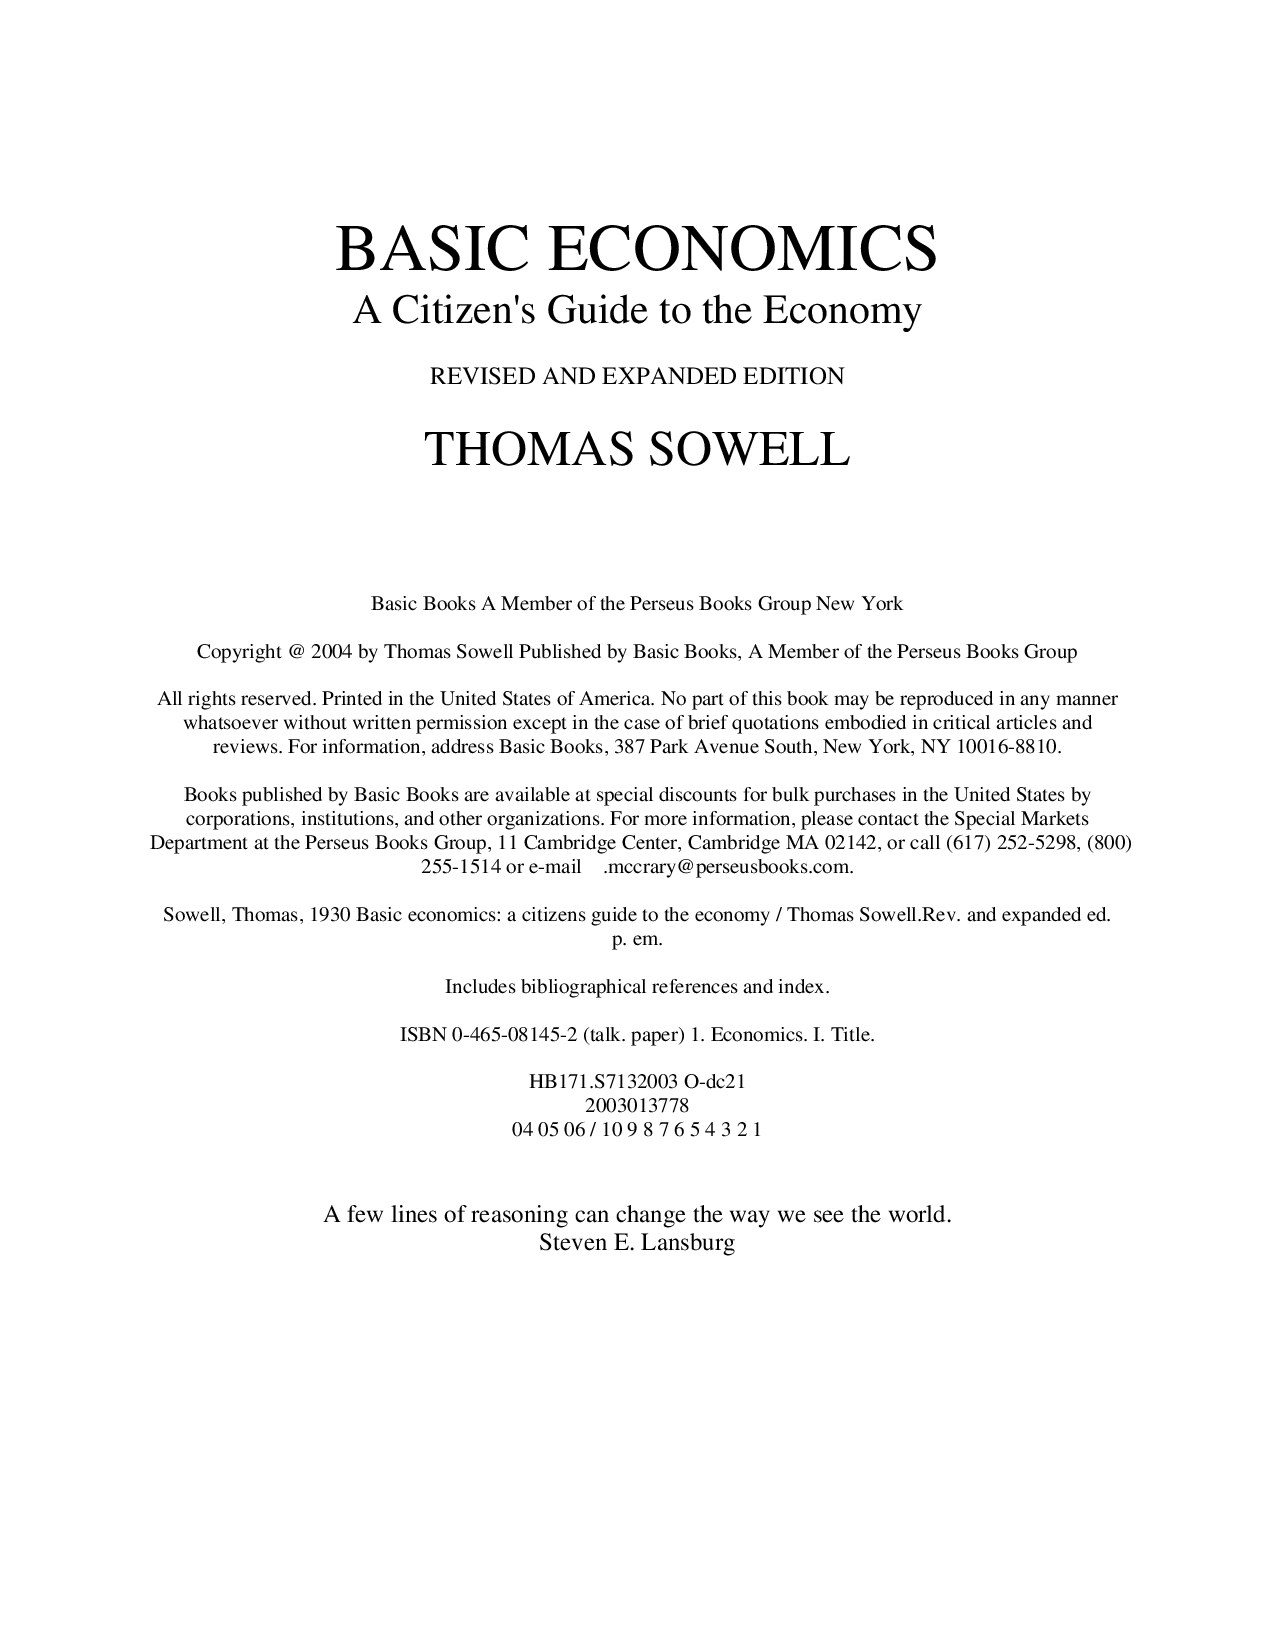 Thomas Sowell - Basic Economics